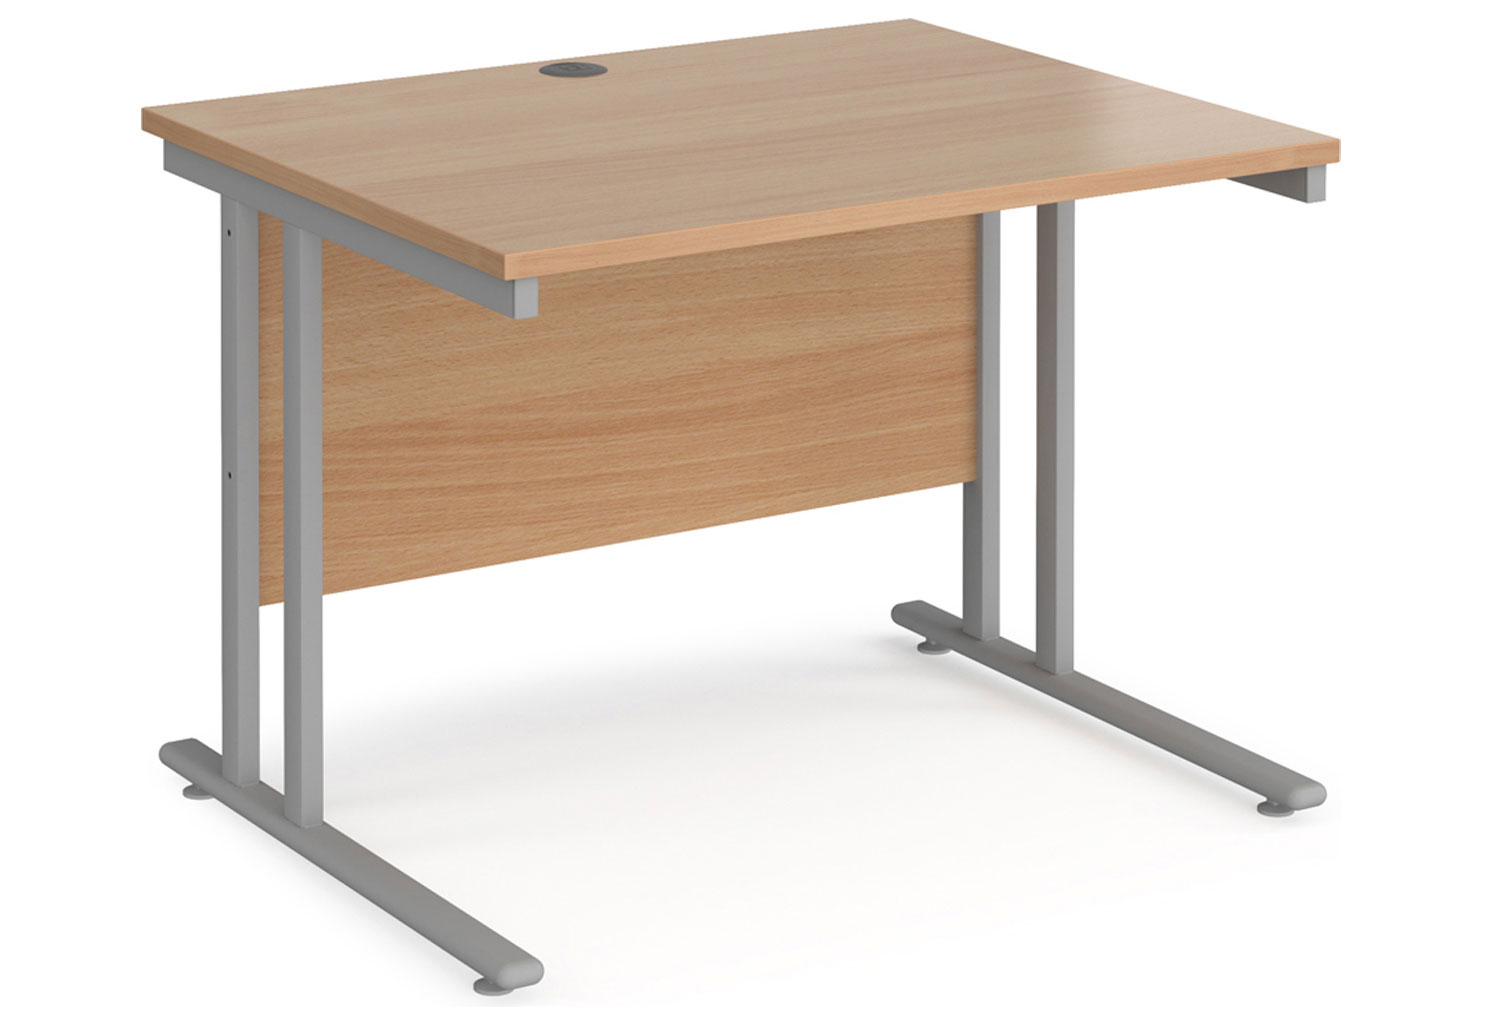 Value Line Deluxe C-Leg Rectangular Office Desk (Silver Legs), 100wx80dx73h (cm), Beech